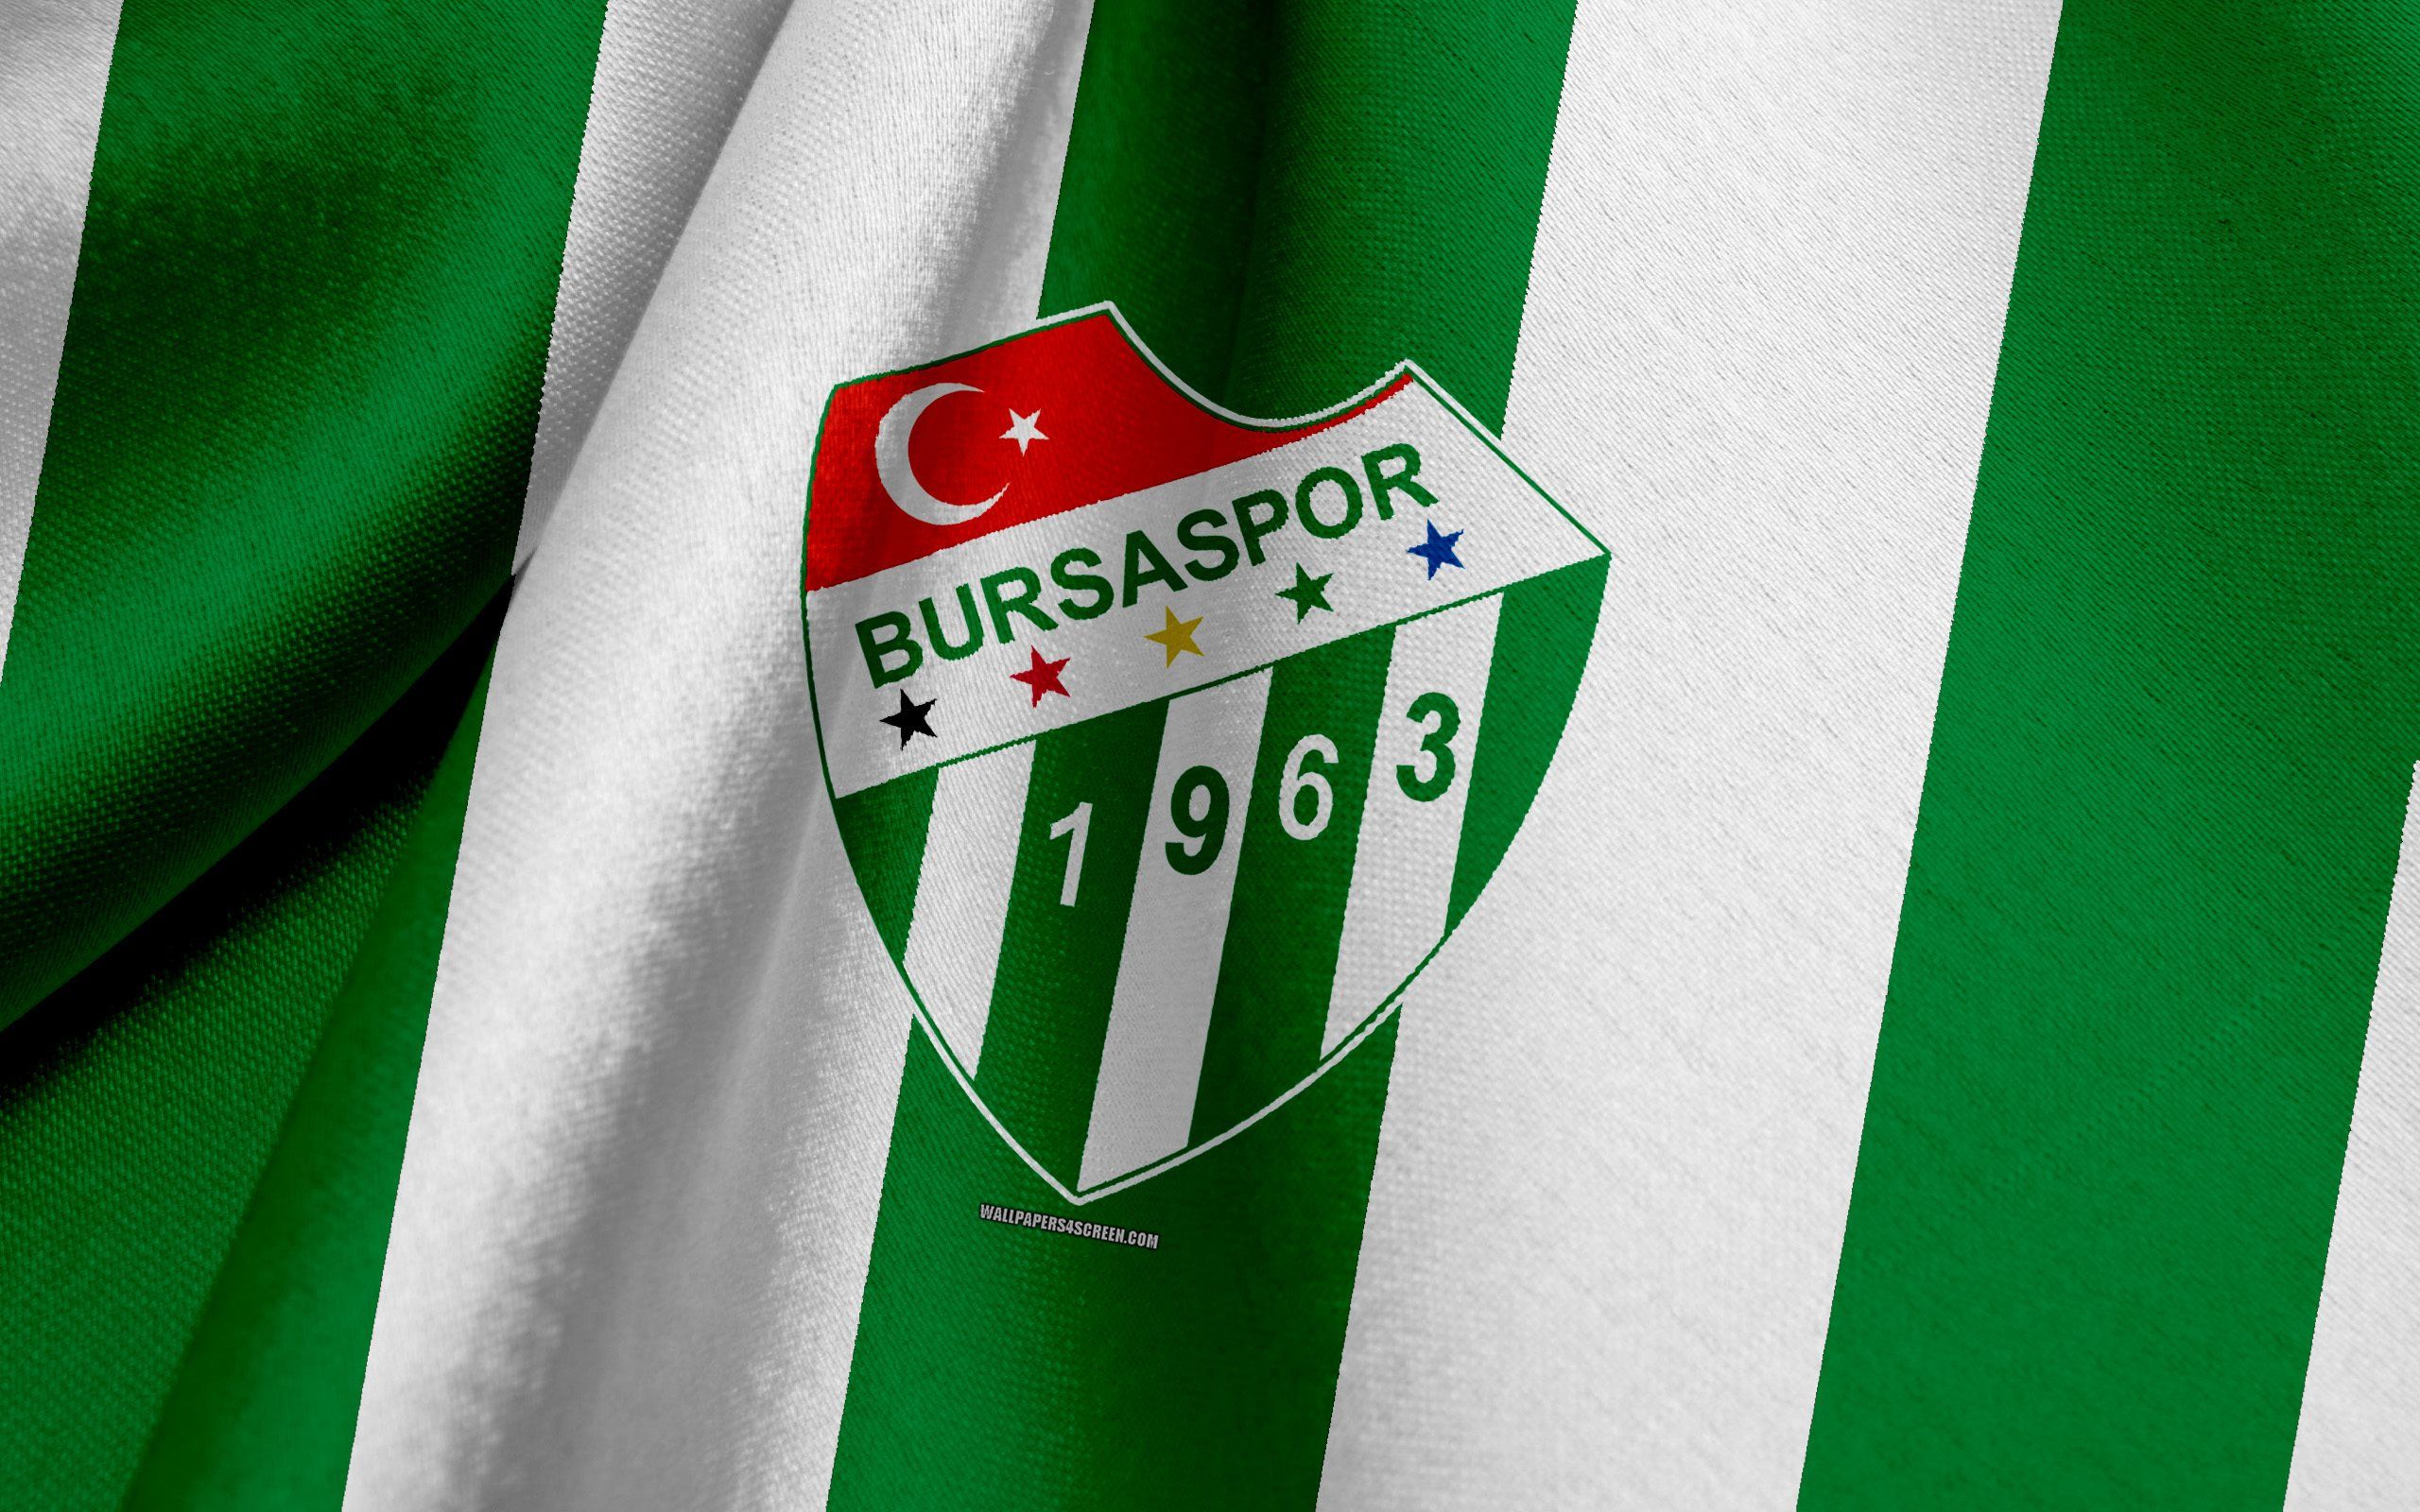 Download wallpaper Bursaspor, Turkish football team, green white flag, emblem, fabric texture, logo, Bursa, Turkey for desktop with resolution 2560x1600. High Quality HD picture wallpaper